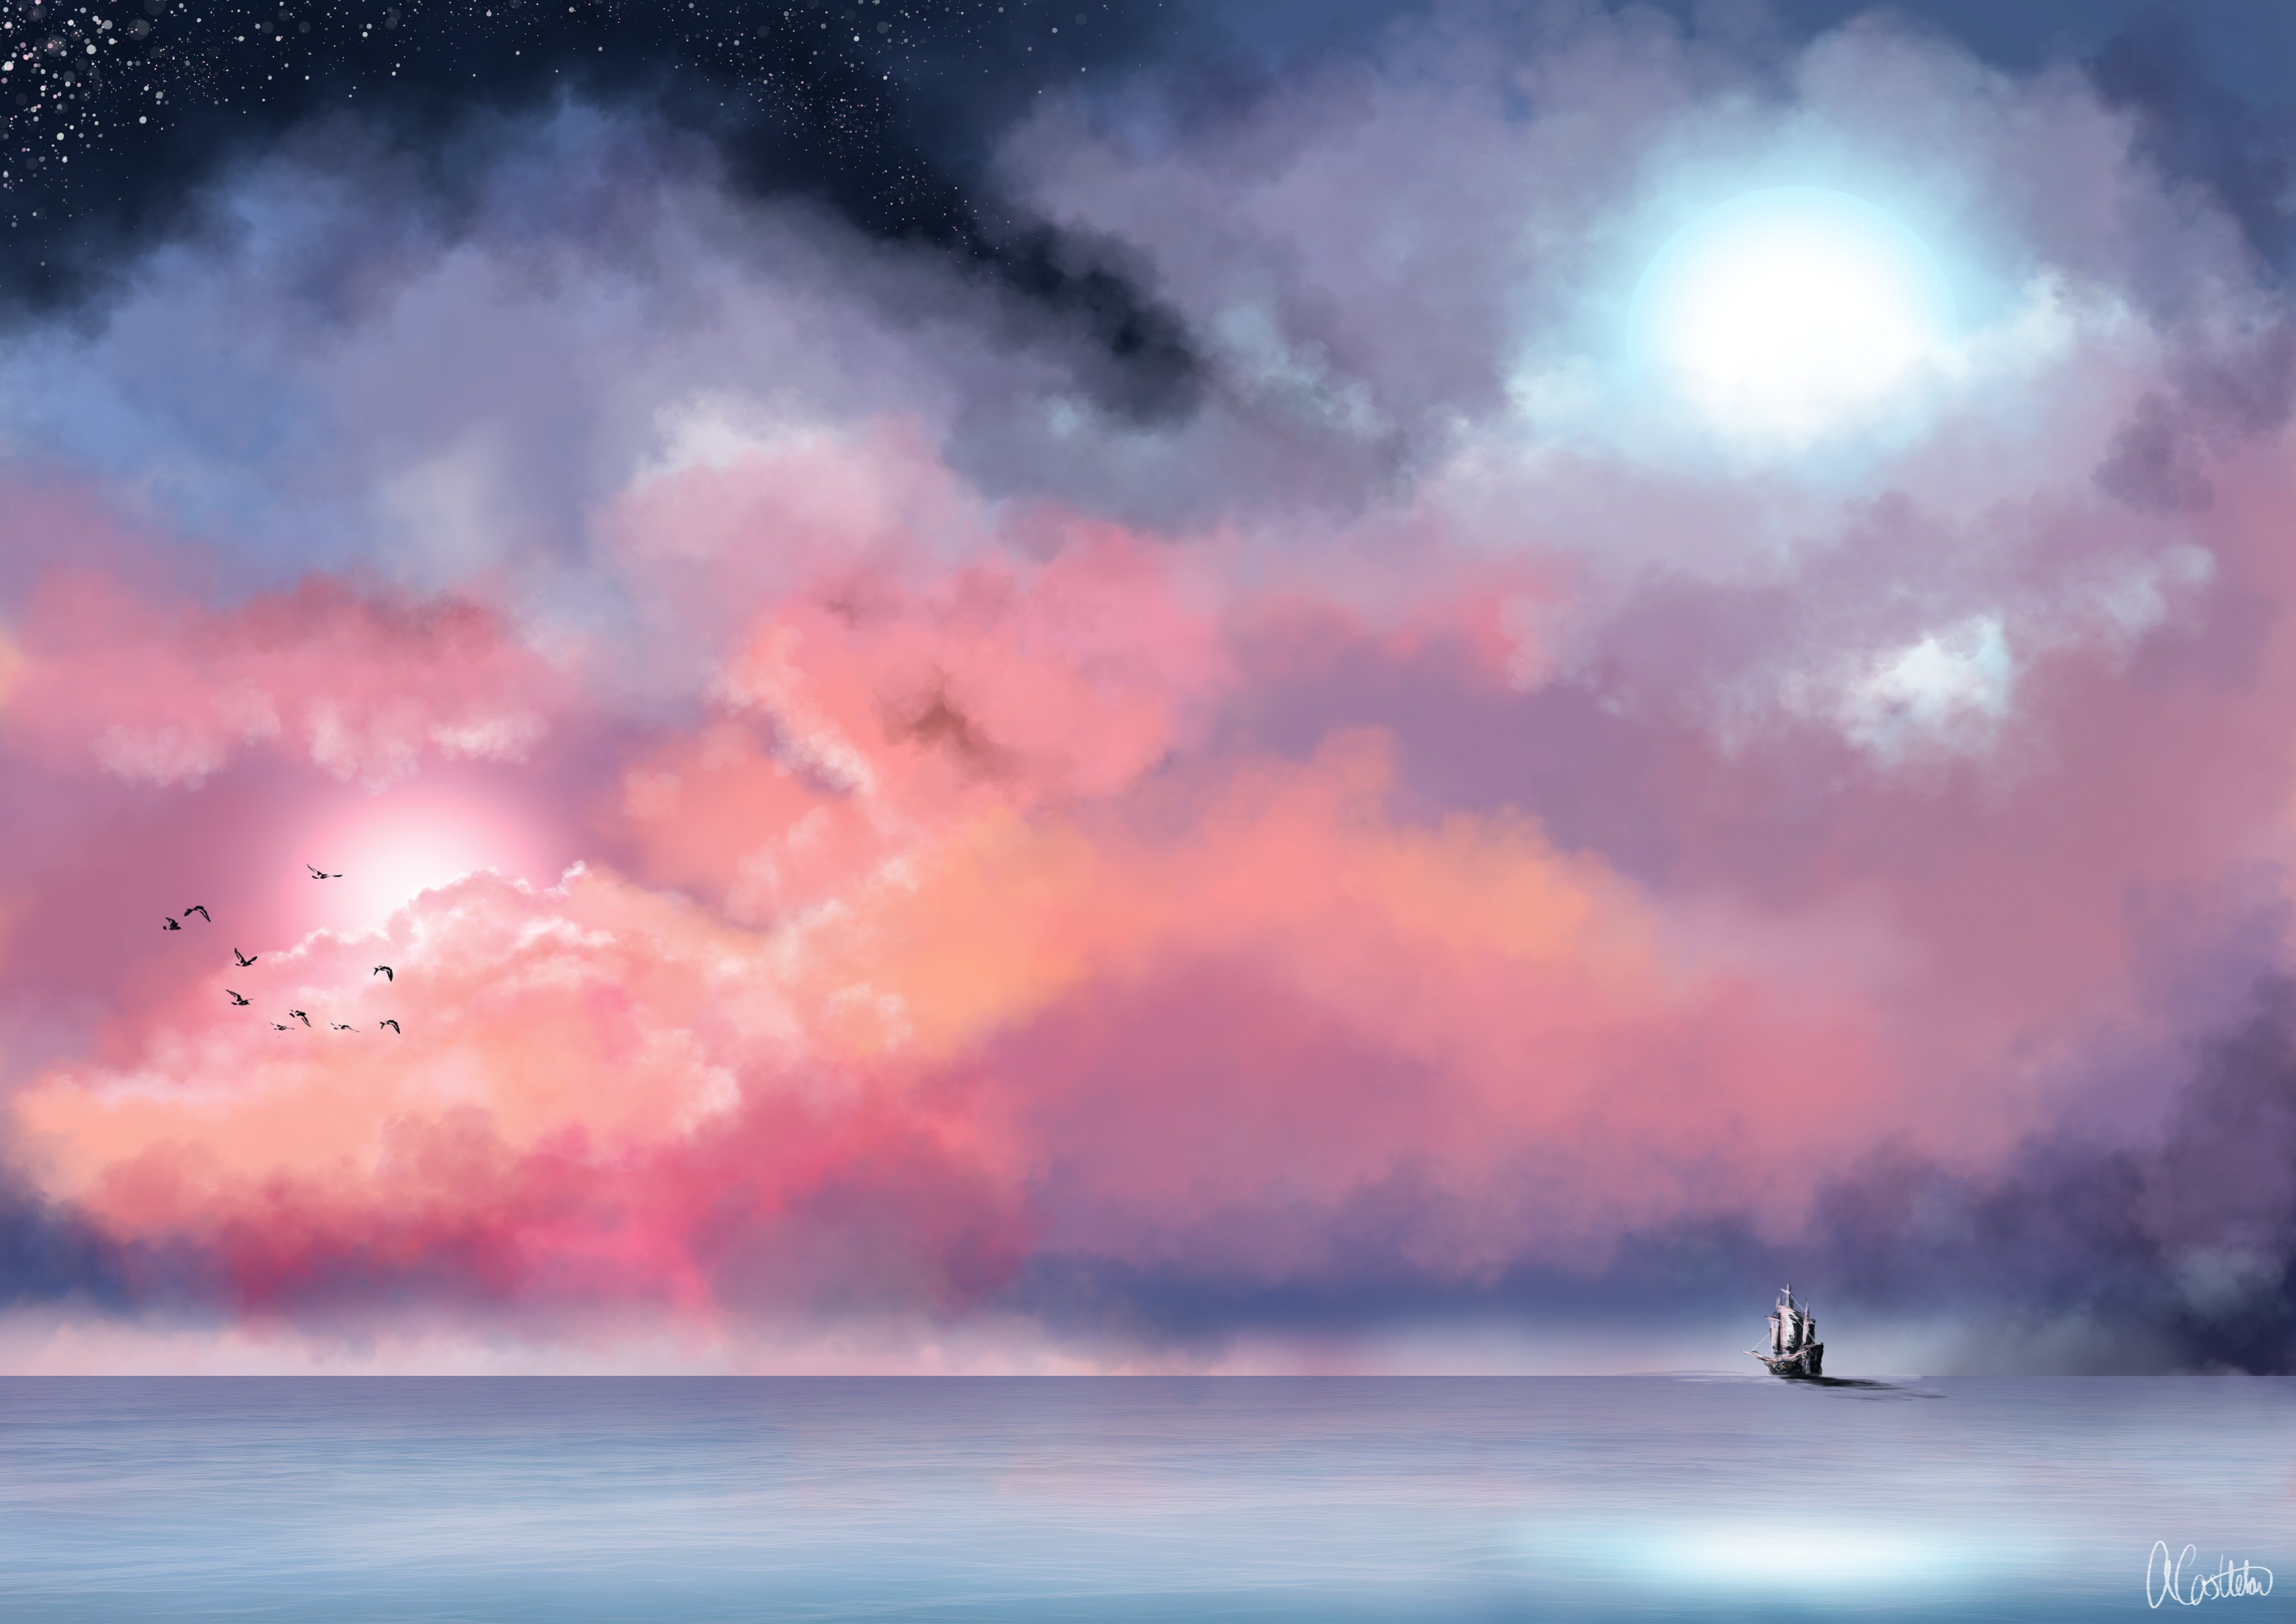 Sea mist painting sky ship fantasy .wallpaperup.com